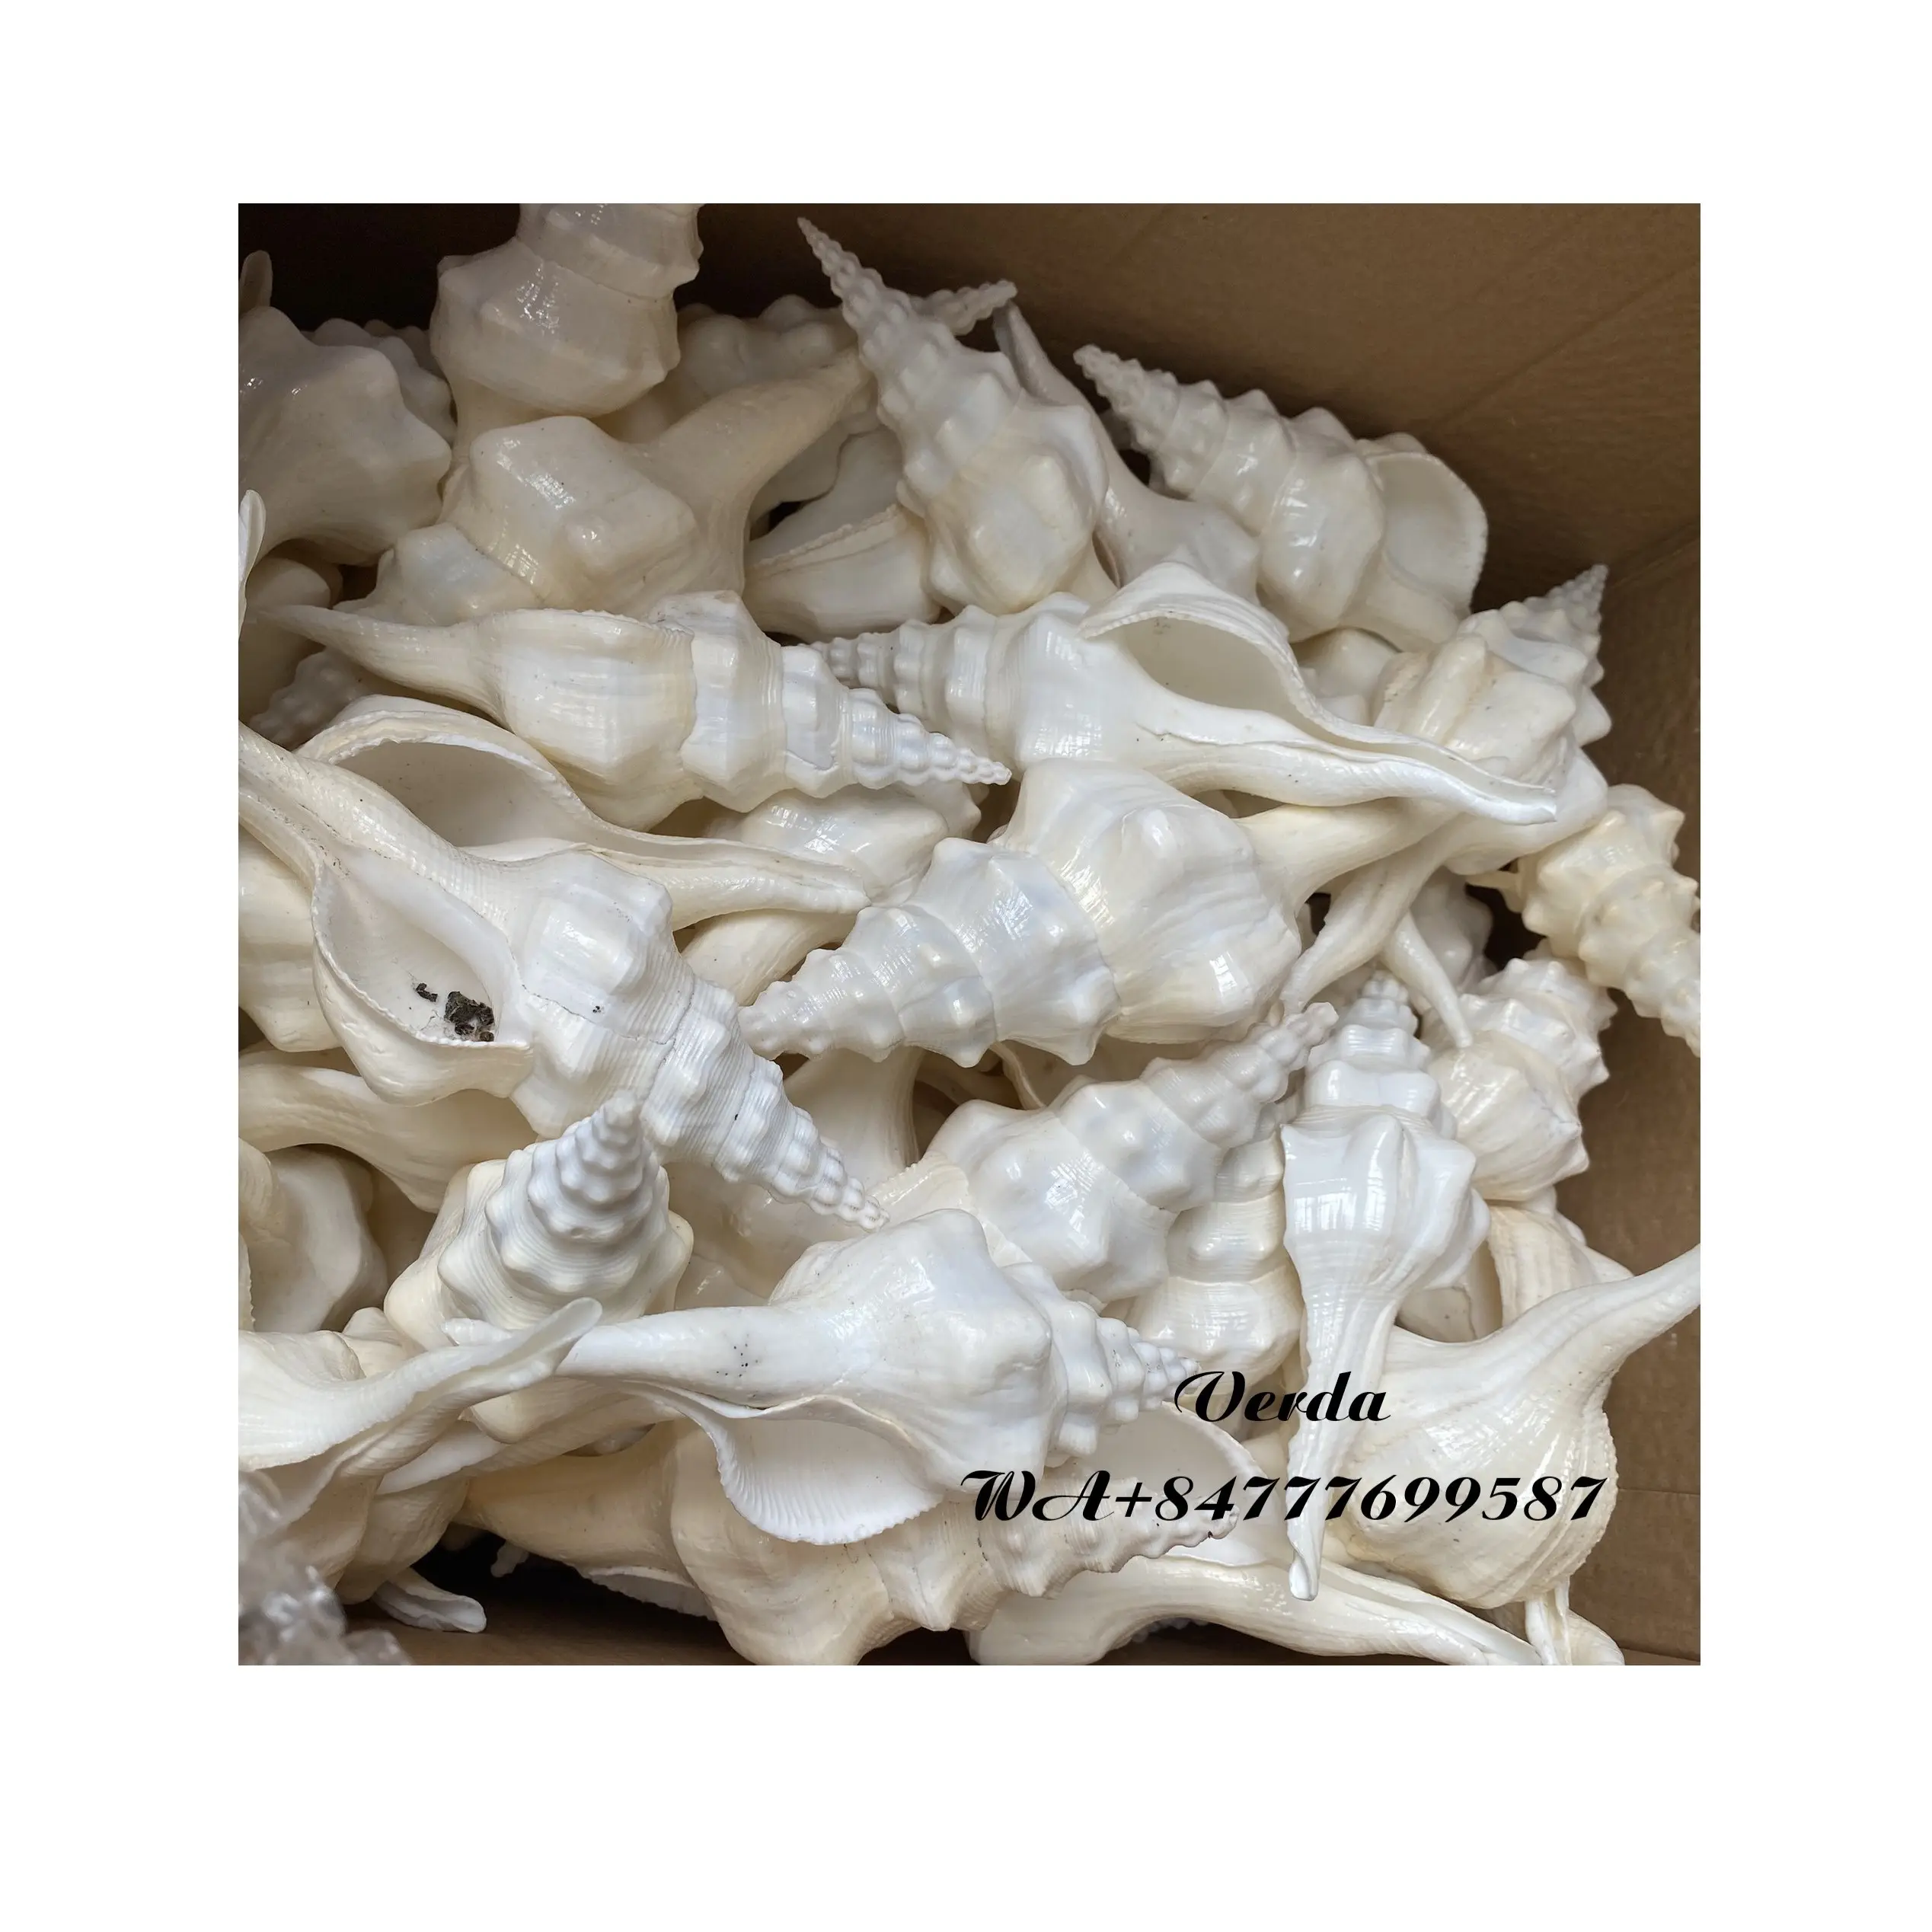 Naturalshell Voor Craft-Seashell Pijp-Seashell Voor Roken-Seashell Souvenir Winkel-Natuurlijke Shell In Bulk WS084587176063